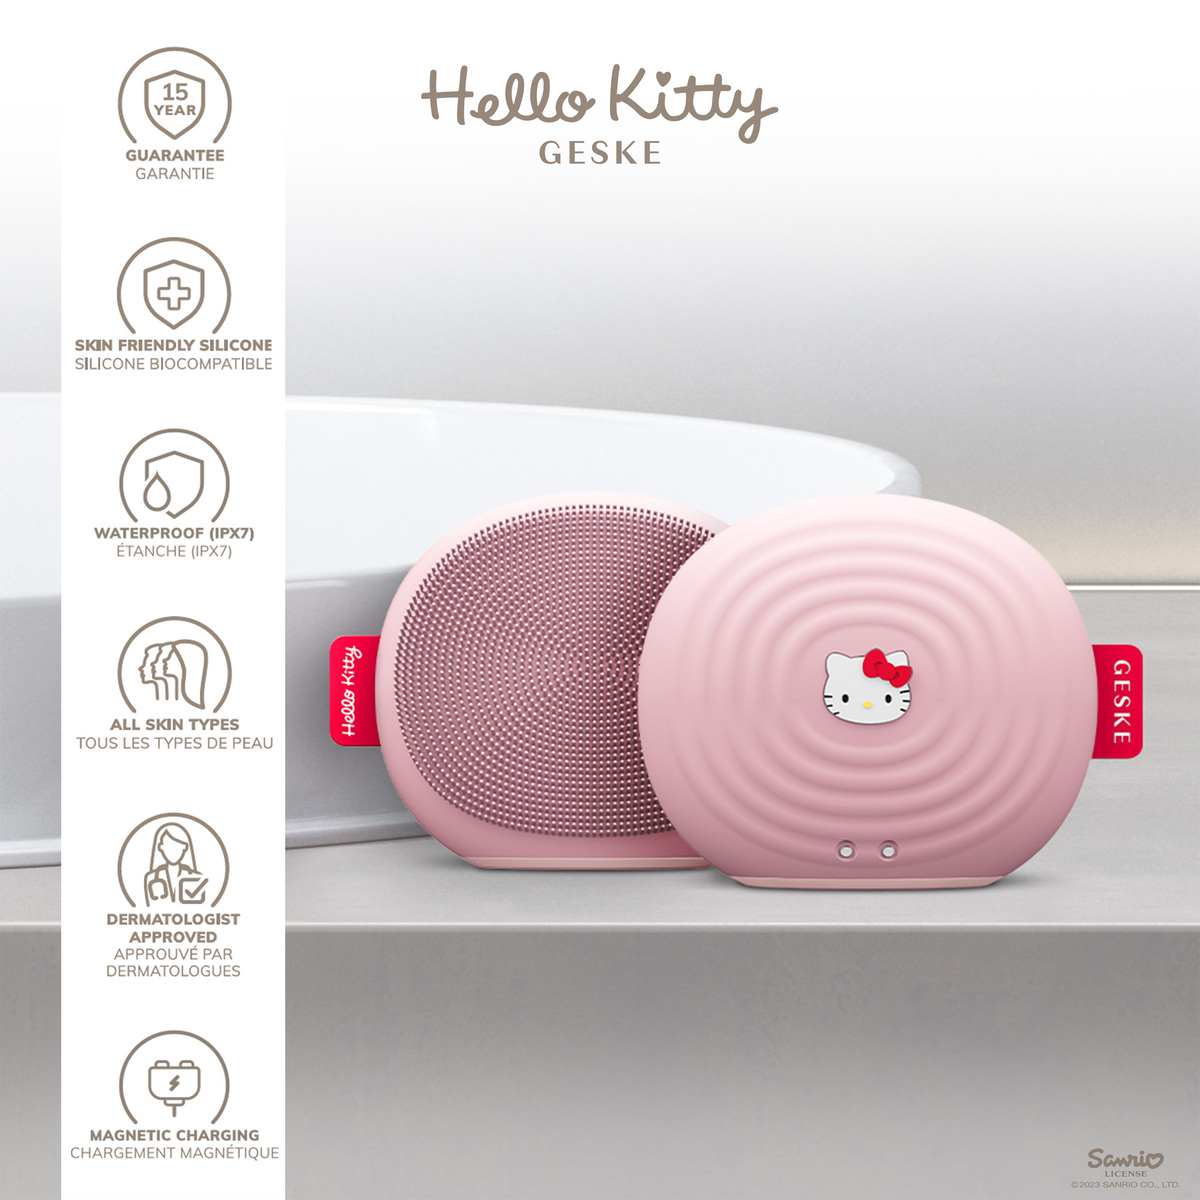 Geske 4 in 1 Hello Kitty Sonic Facial Brush, Pink, HK000011PI01